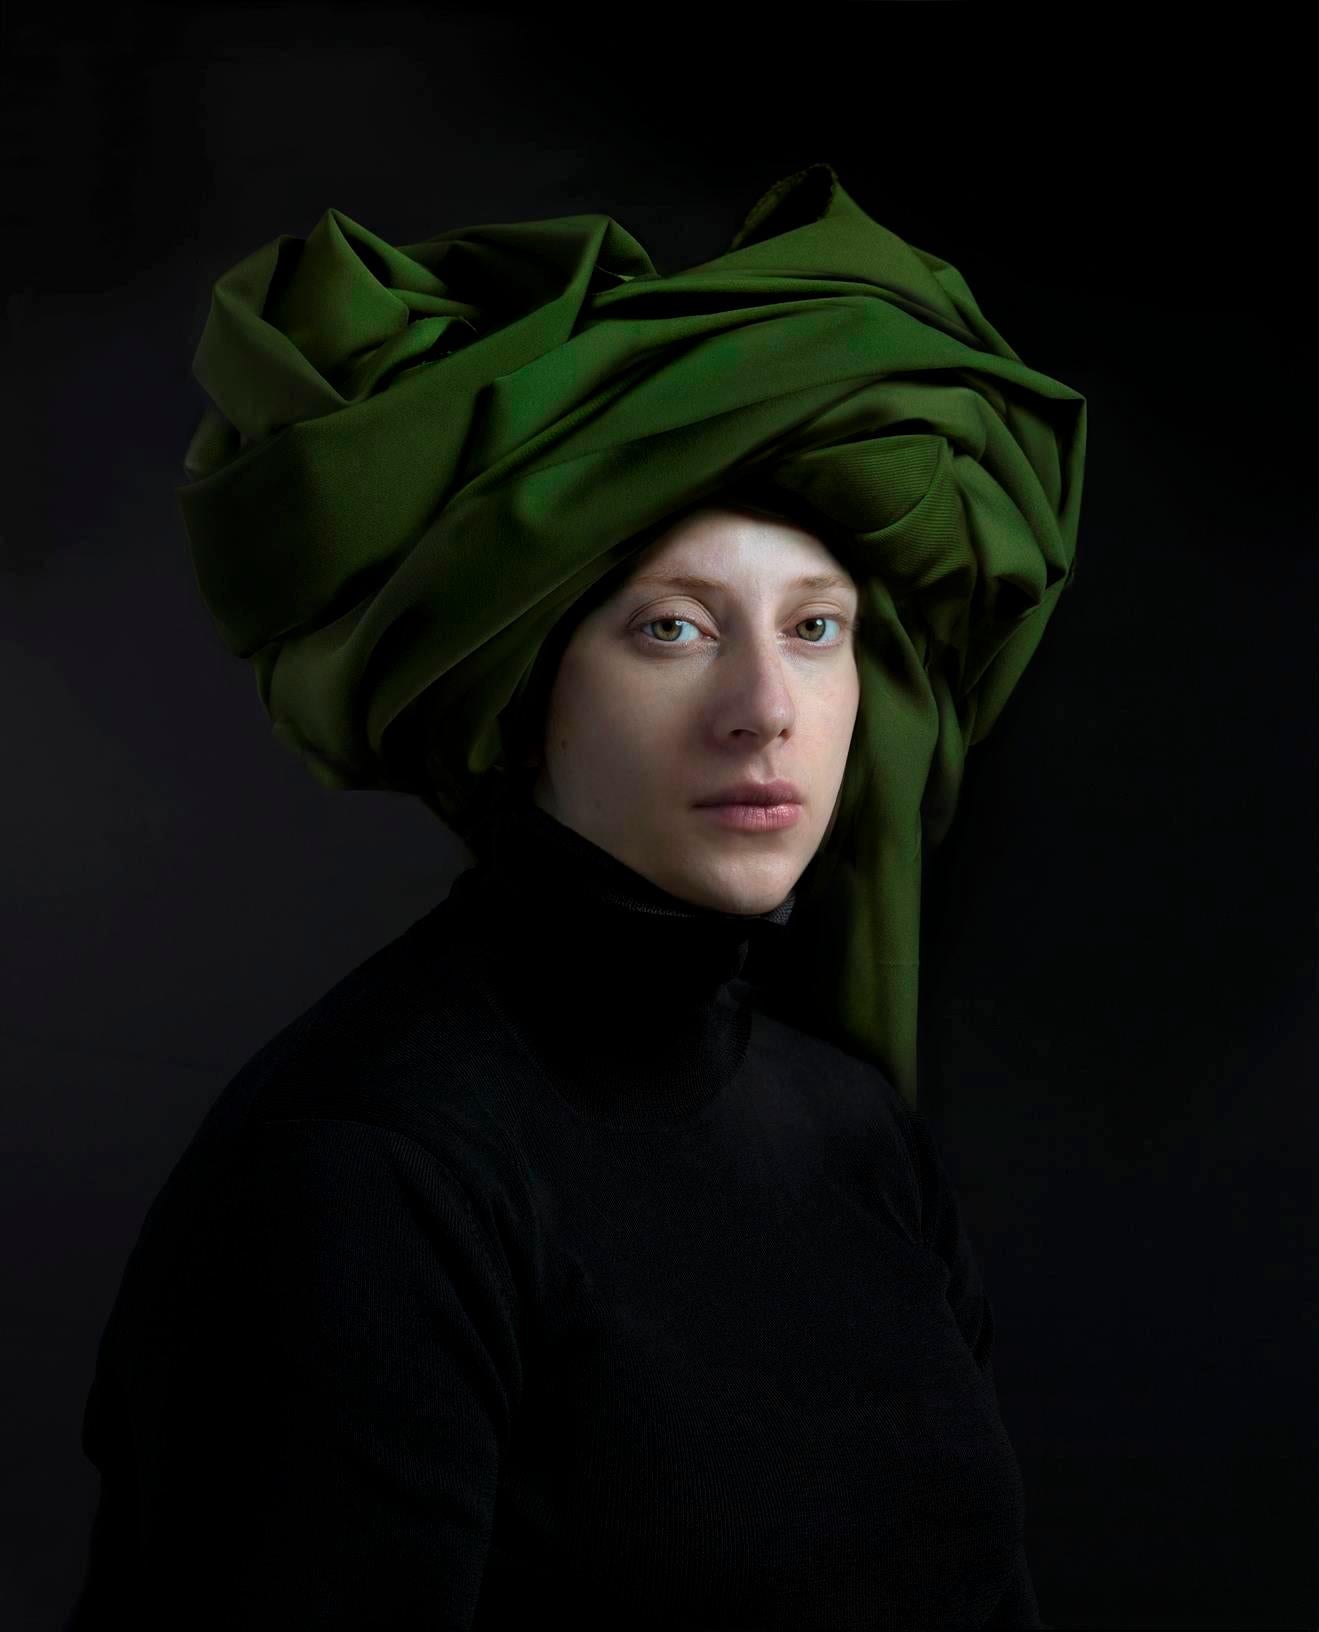 Hendrik Kerstens Portrait Photograph - Green Tuban